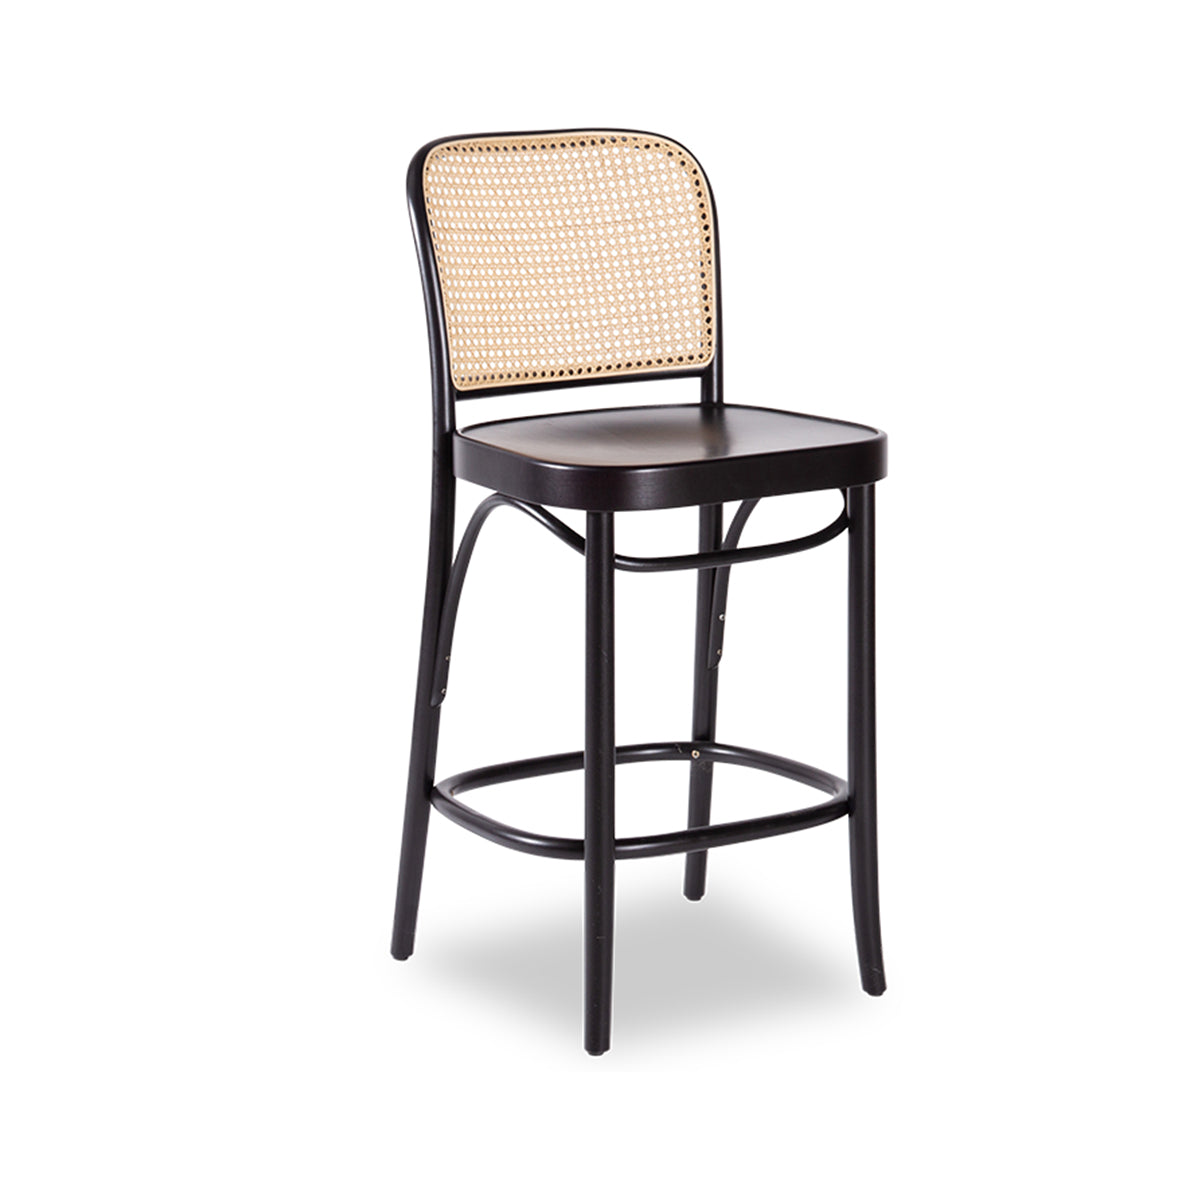 Hoffmann Bar Stool - Wood Seat/Cane Backrest (Black Stain).